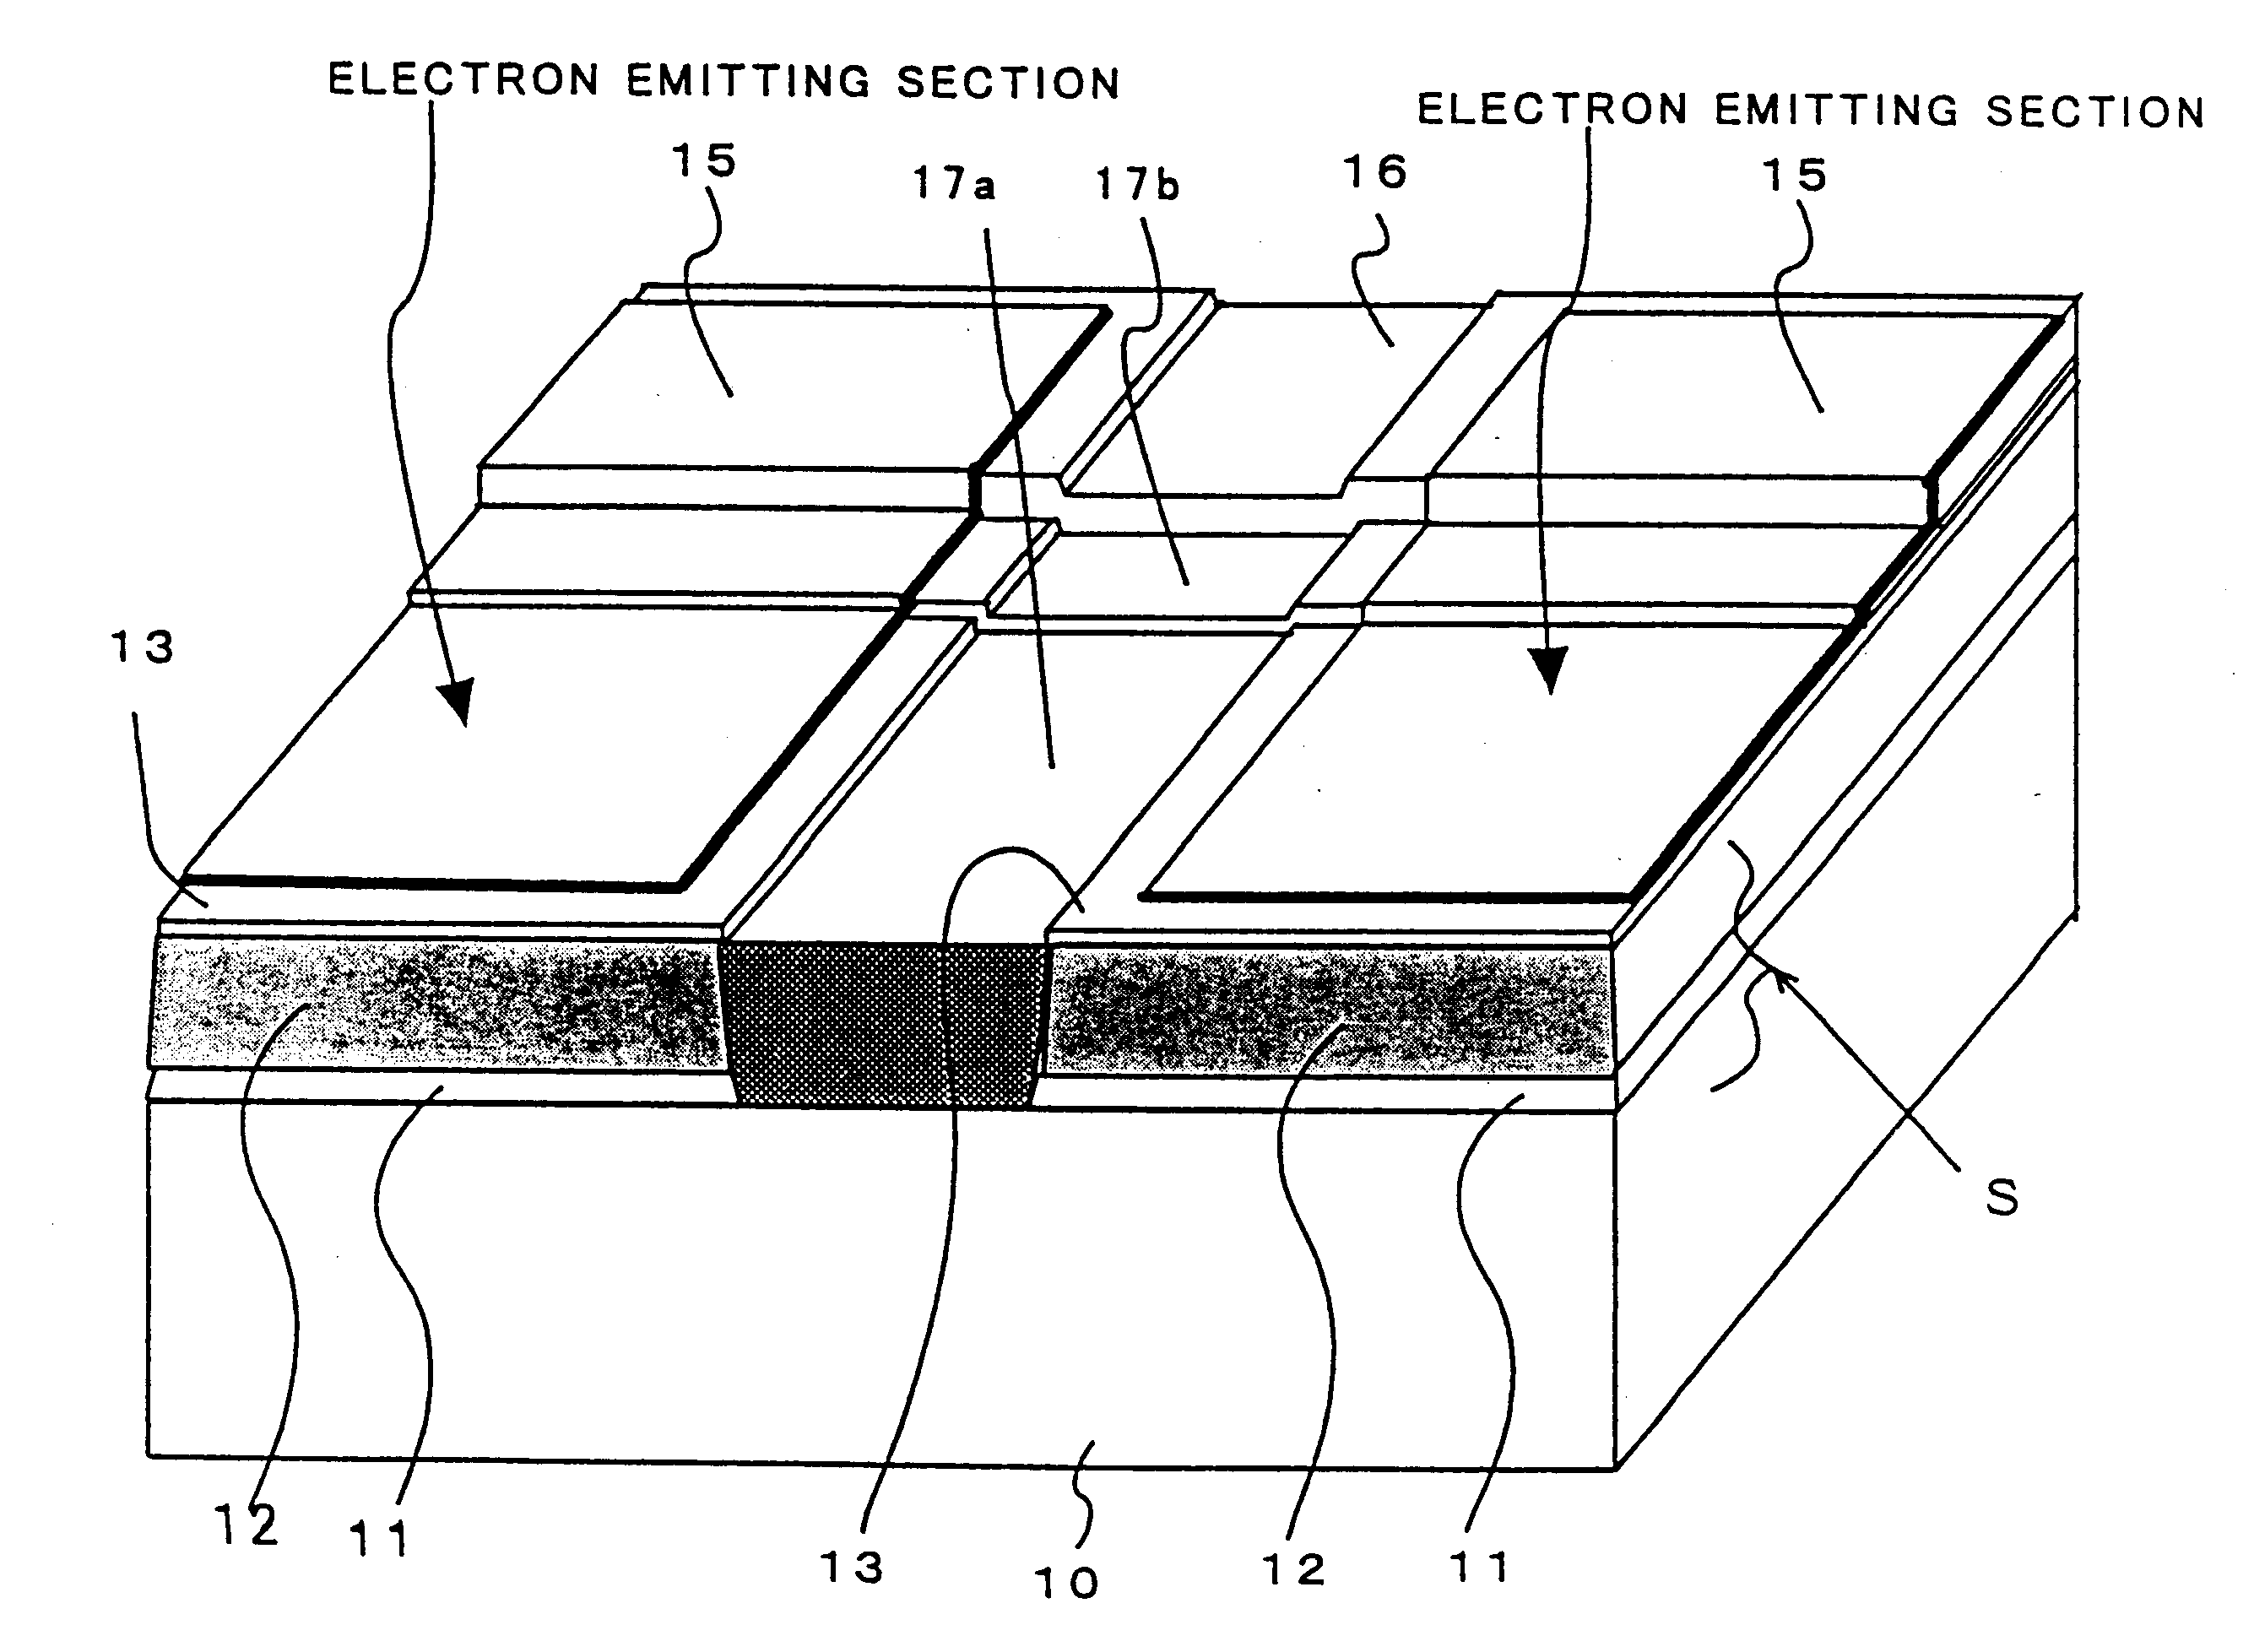 Flat panel display device utilizing electron emission devices